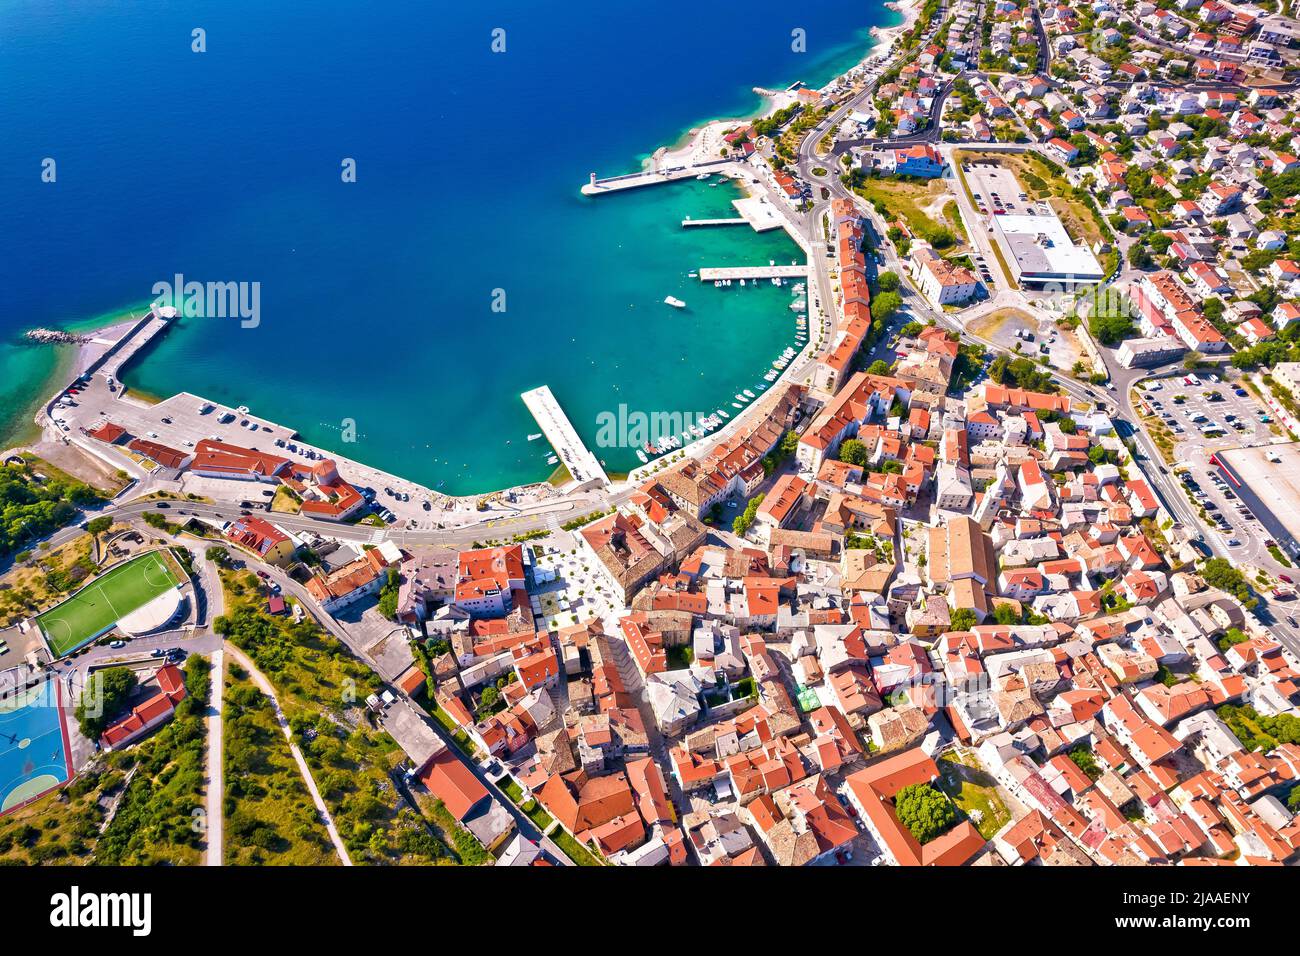 Town of Senj waterfront aerial view, Adriatic sea, Primorje region of Croatia Stock Photo